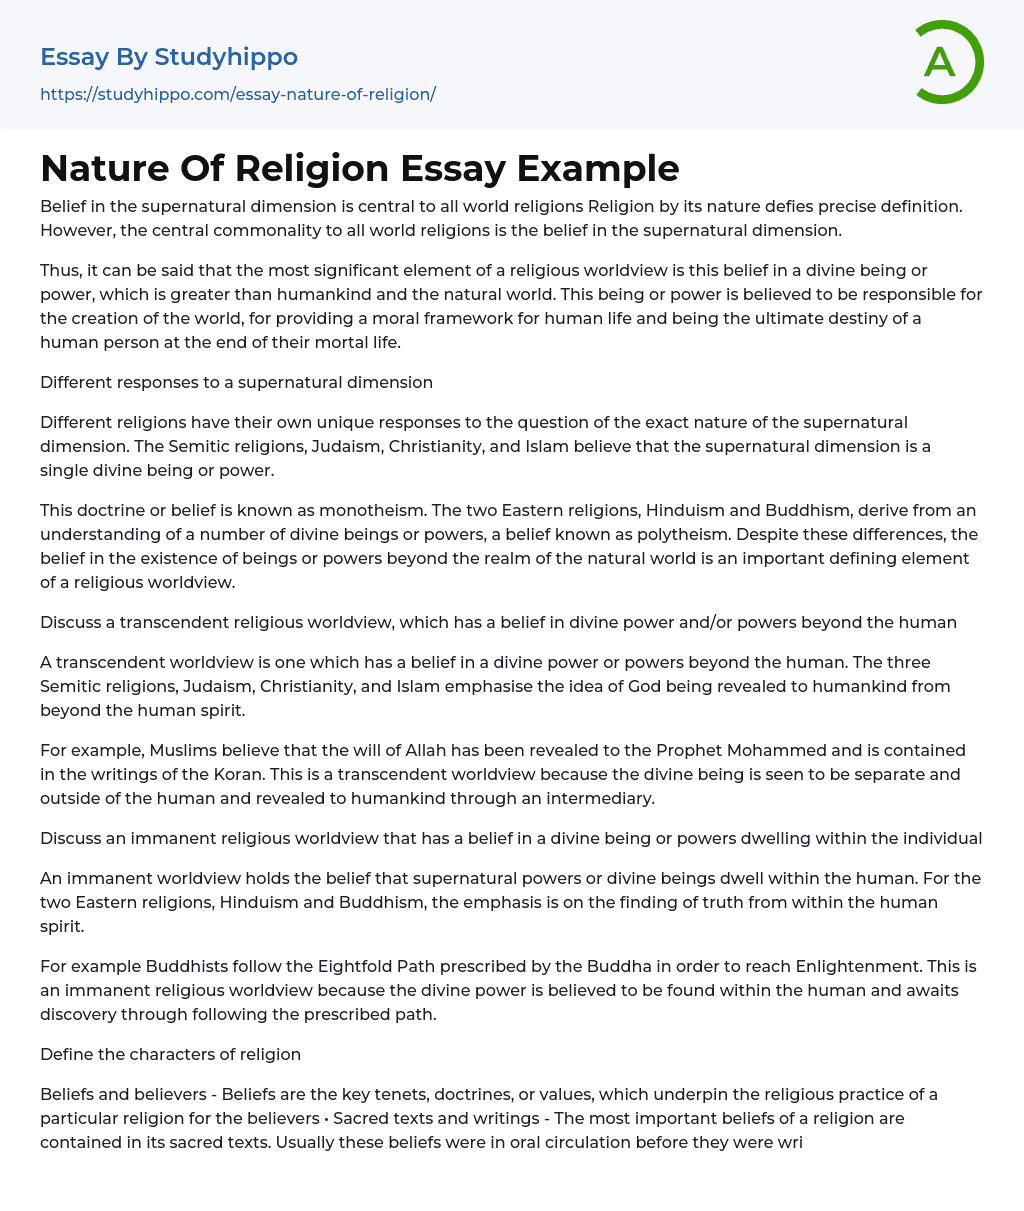 Nature Of Religion Essay Example